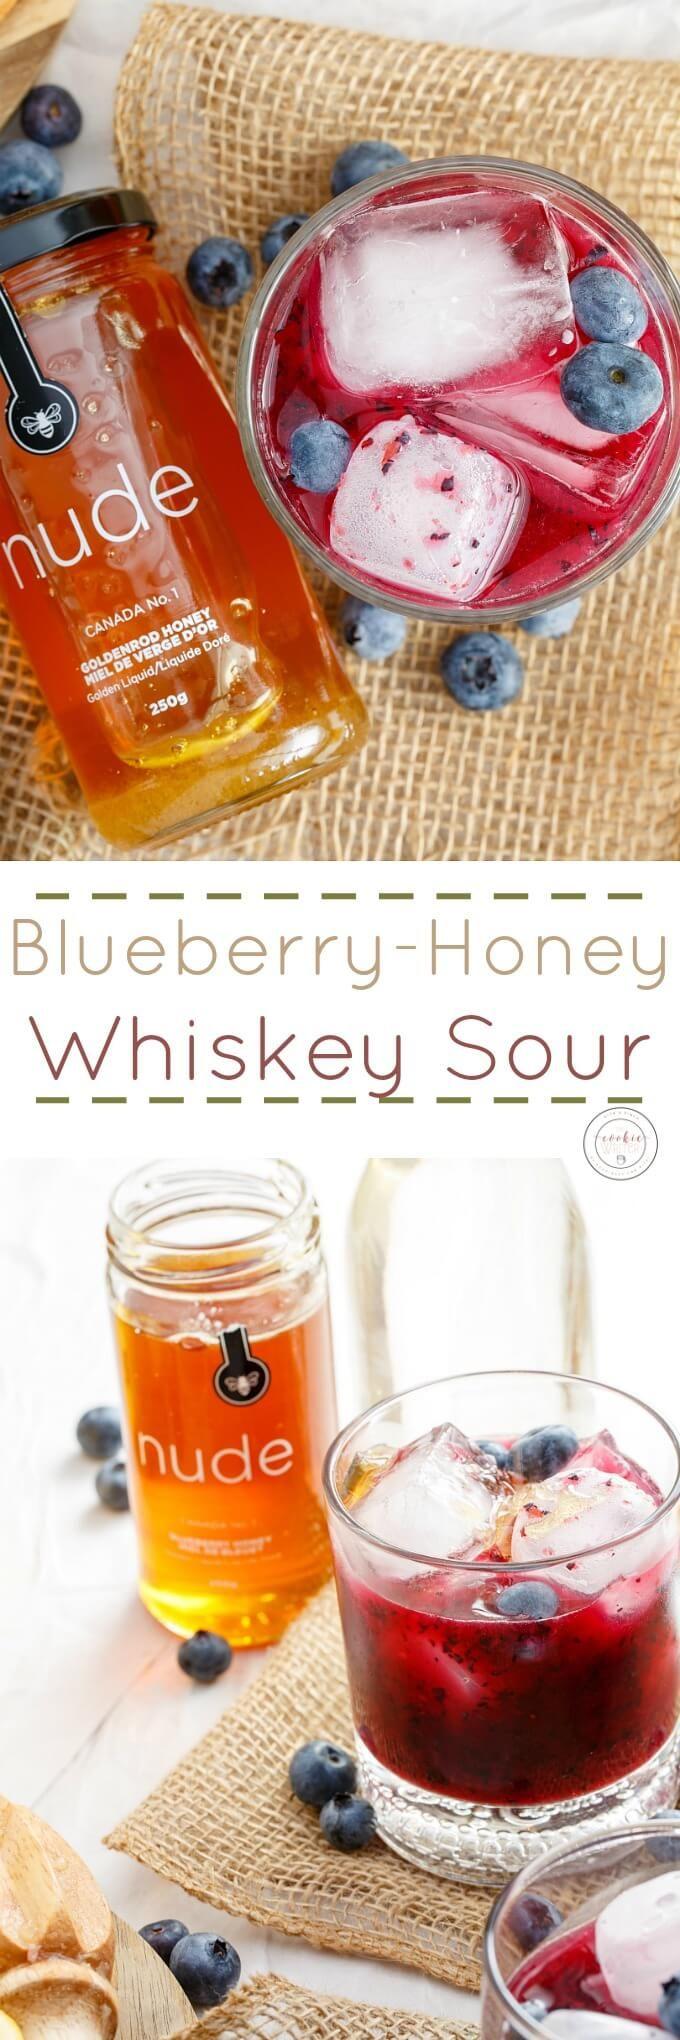 Wedding - Blueberry-Honey Whiskey Sour